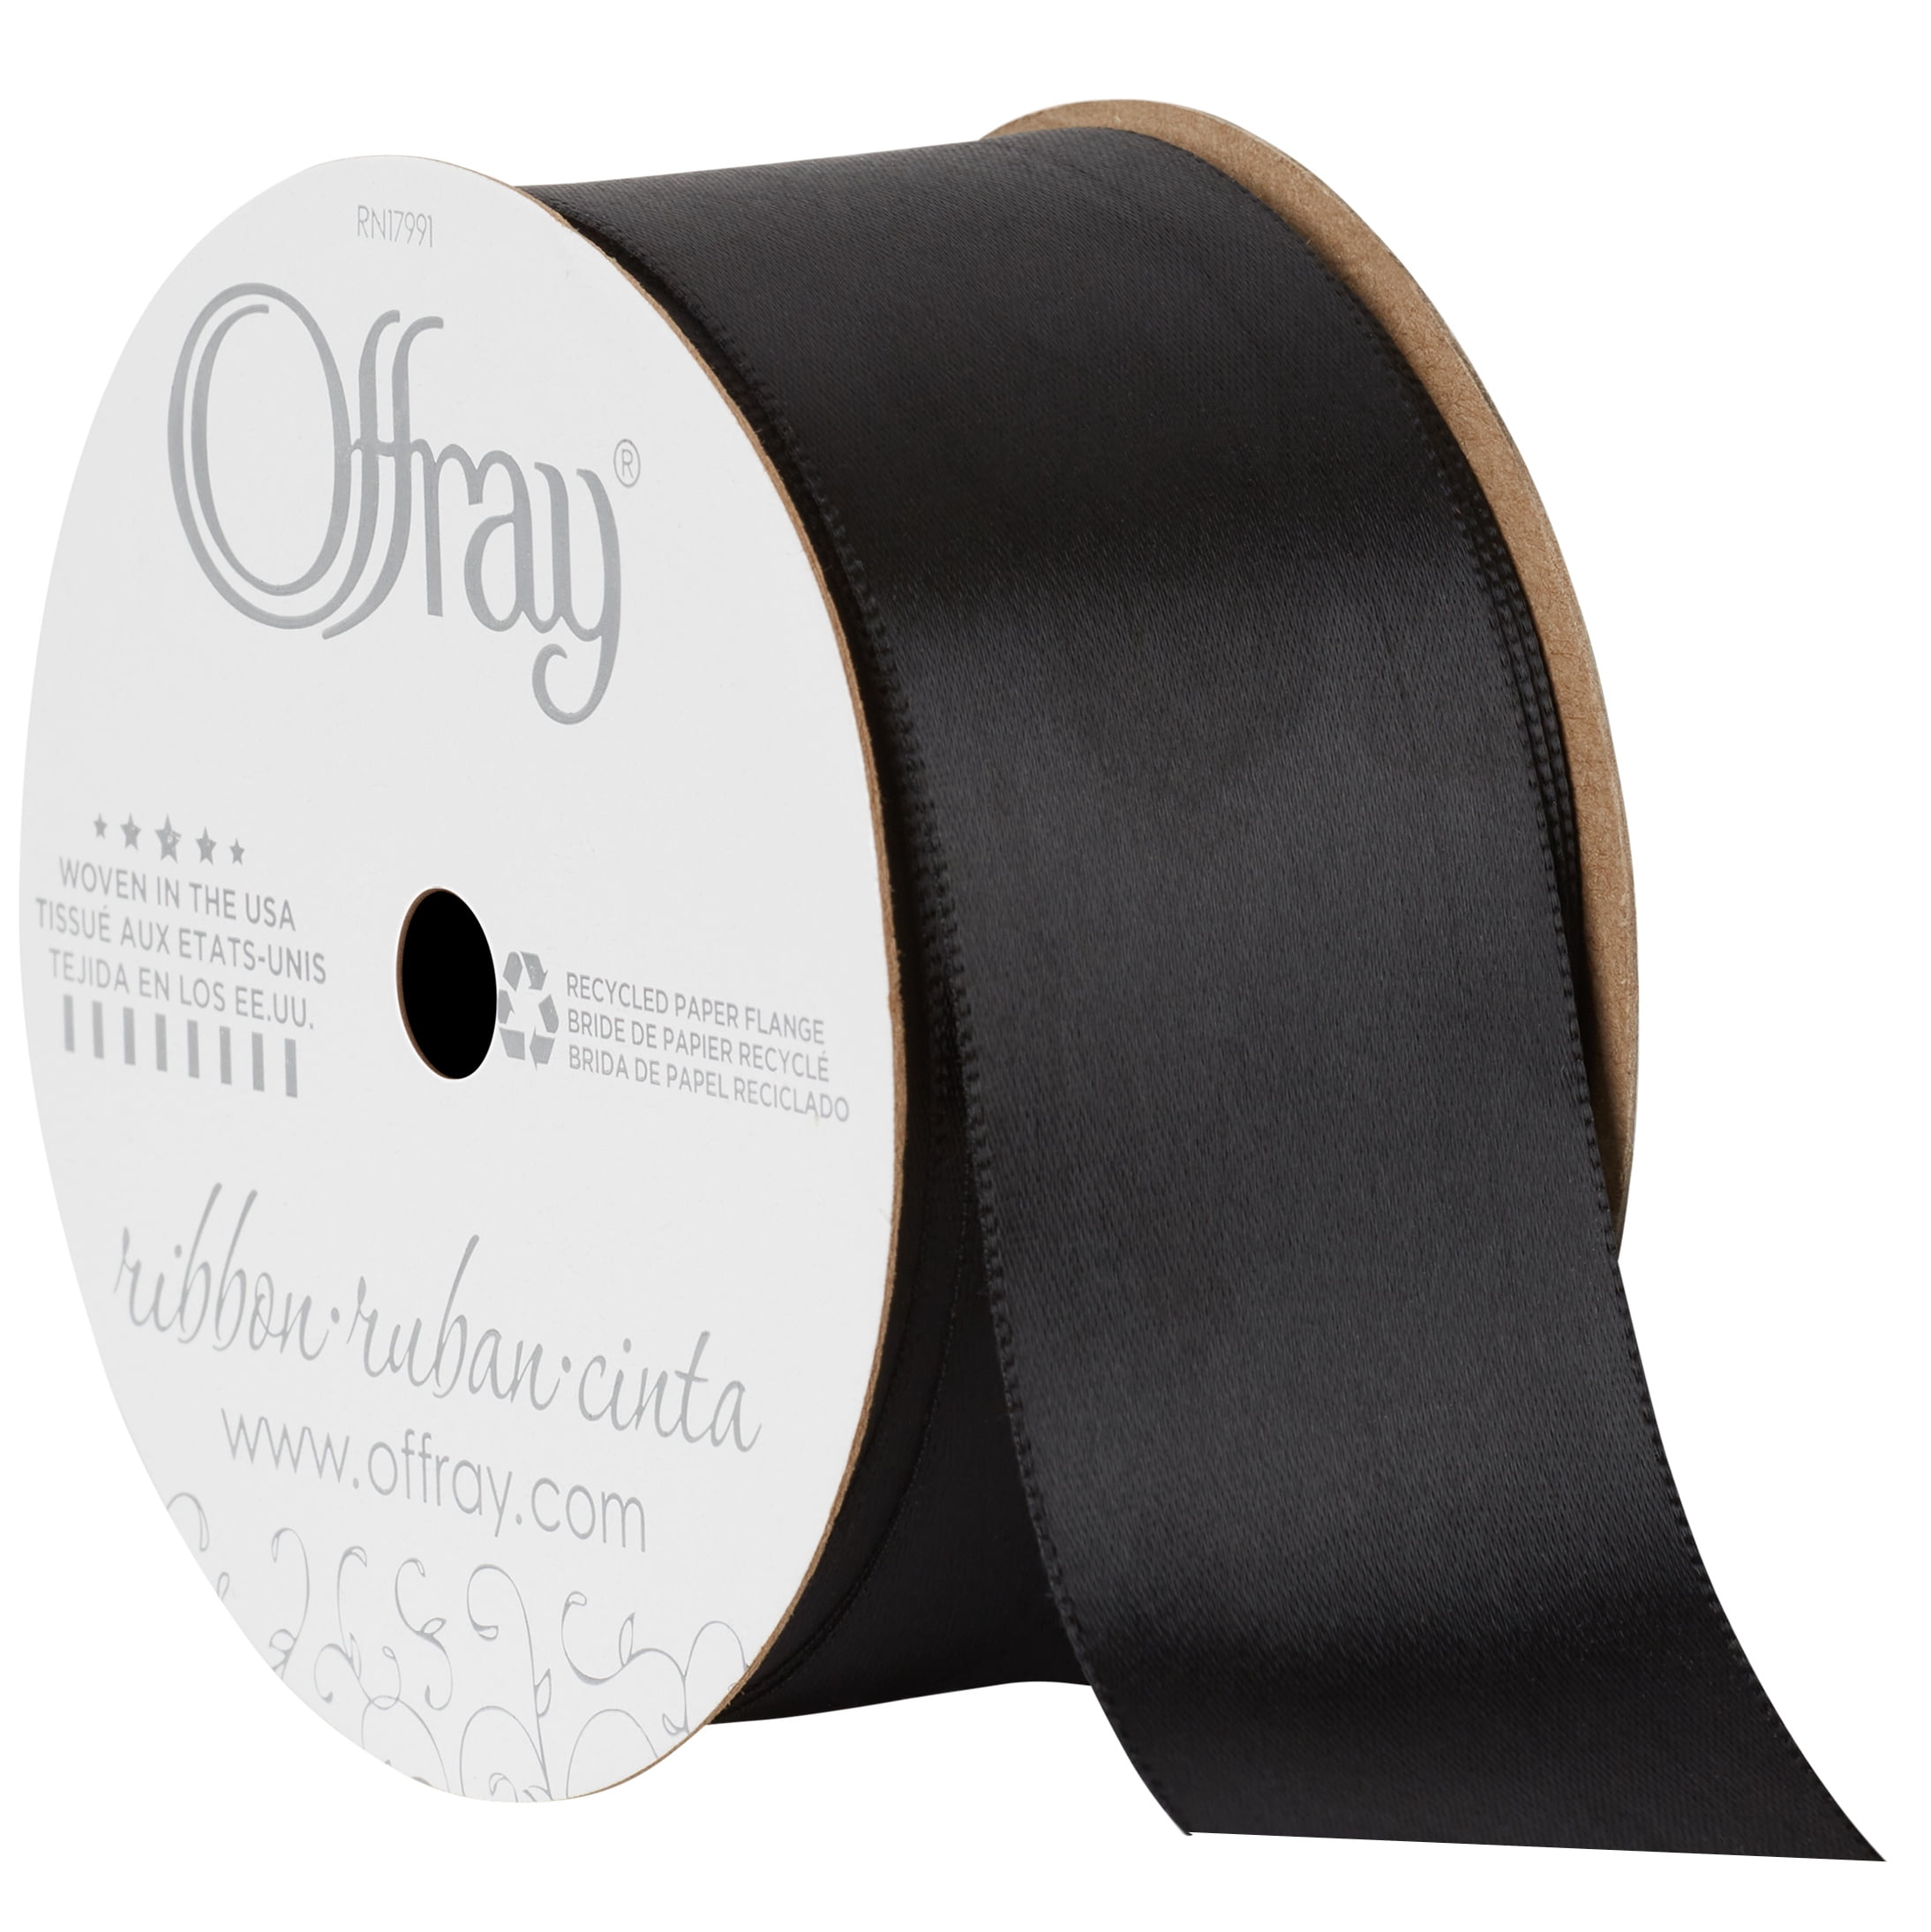 Offray Ribbon, Black 1 1/2 inch Single Face Satin Polyester Ribbon, 12 feet